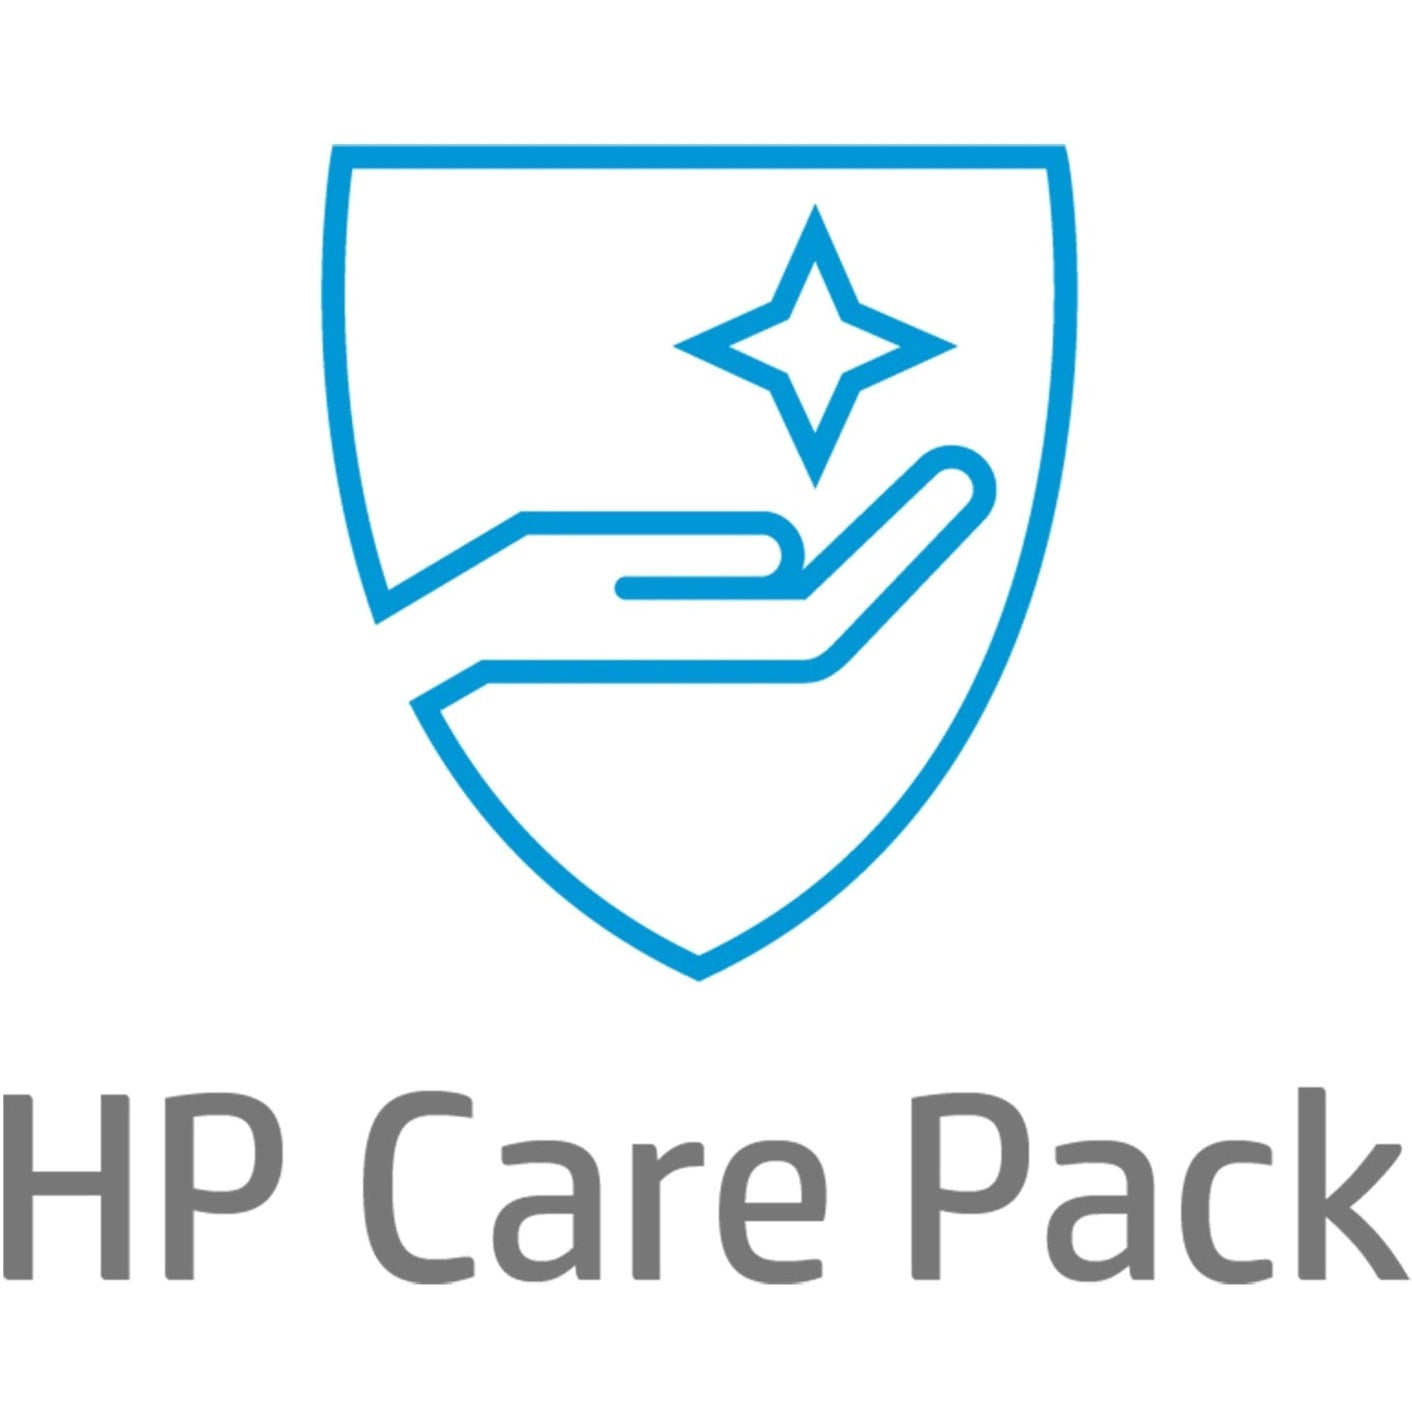 HP Care Pack - 4 Year - Warranty (U9VF1E)